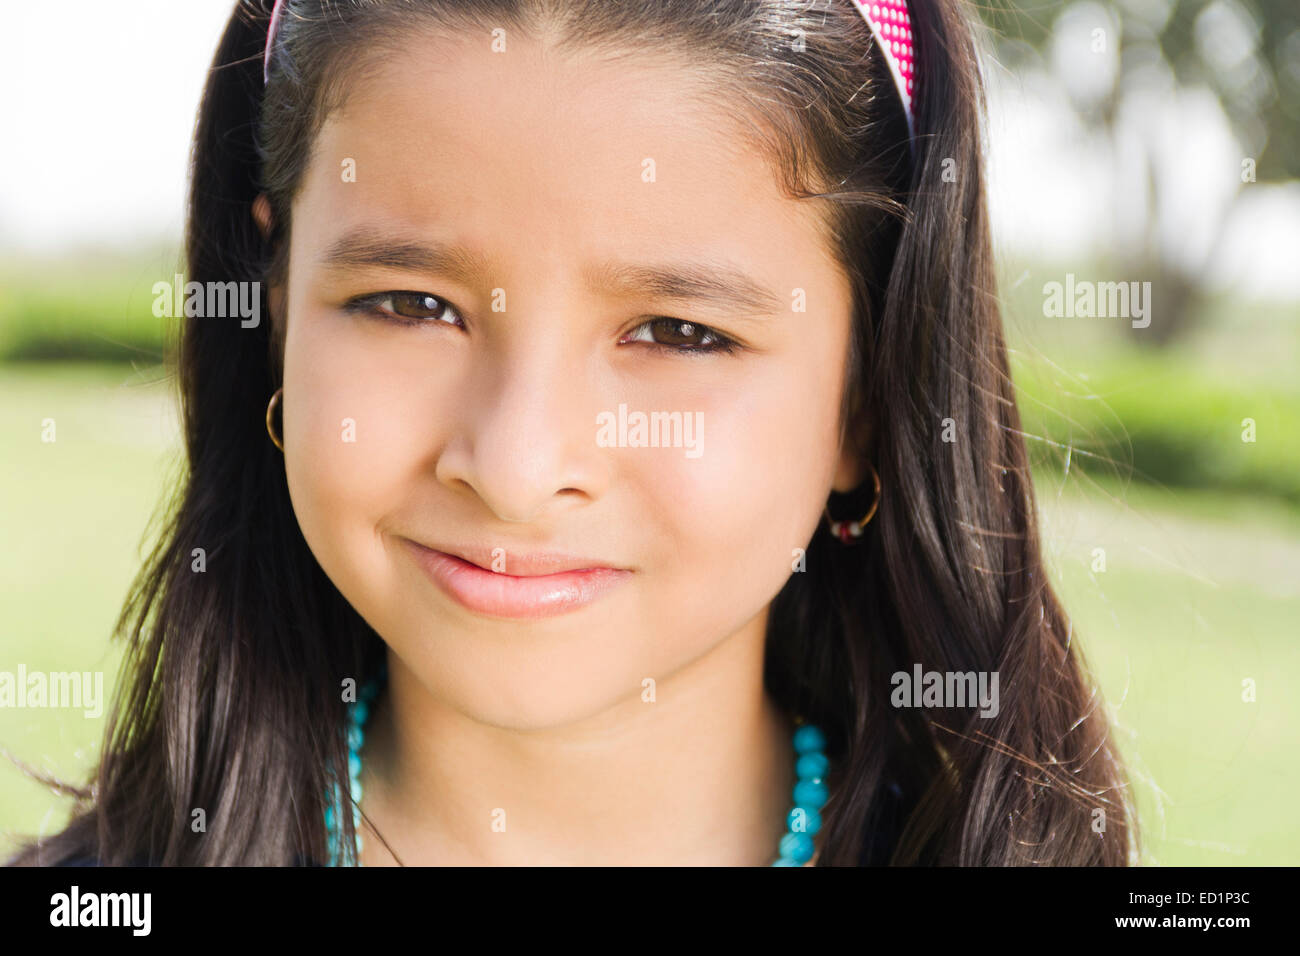 1 indians Beautiful Child girl park enjoy Stock Photo